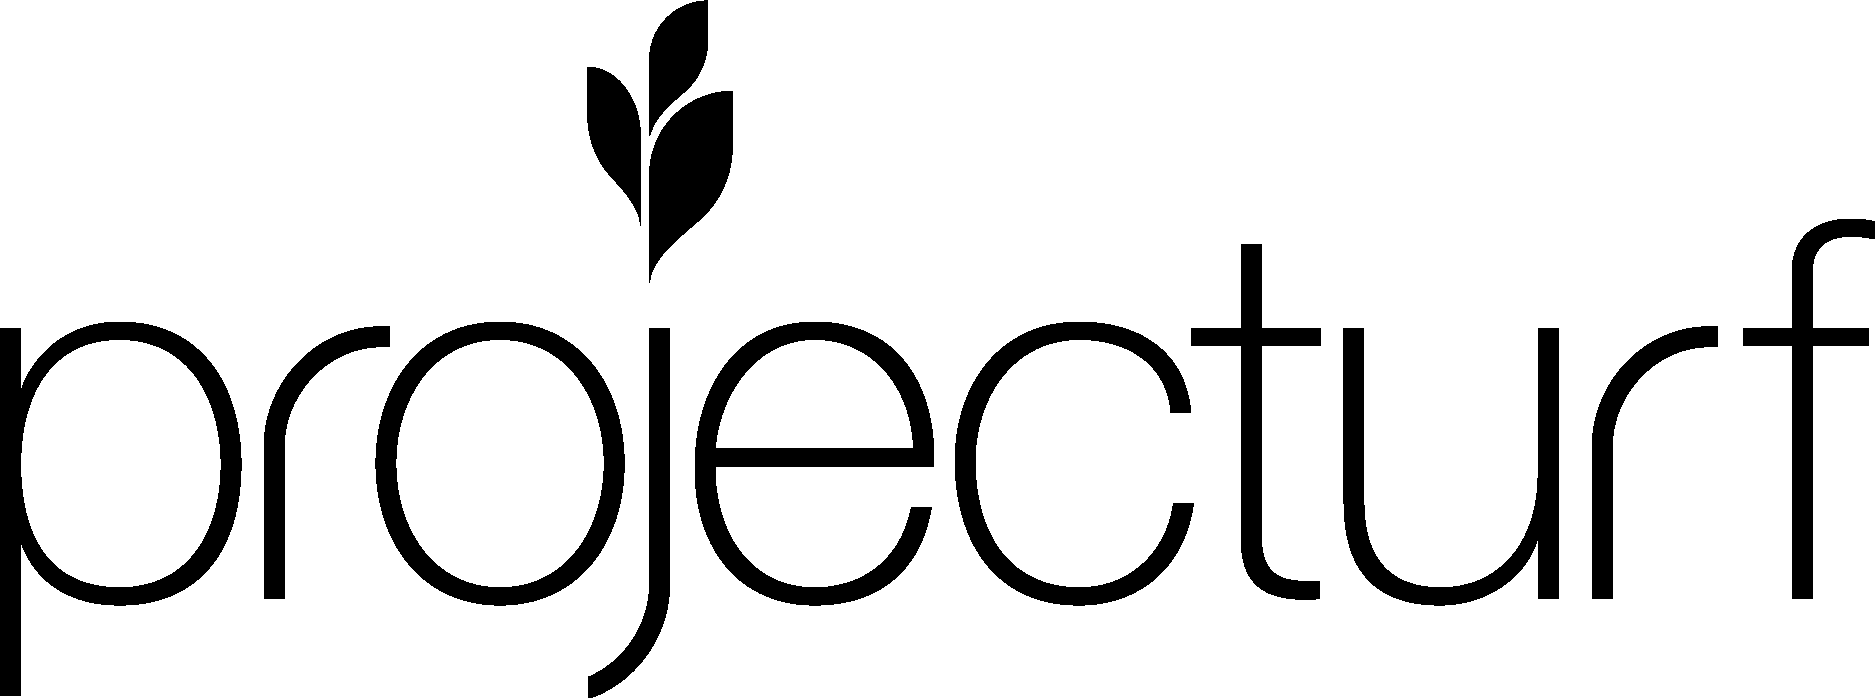 Projecturf black Logo Vector